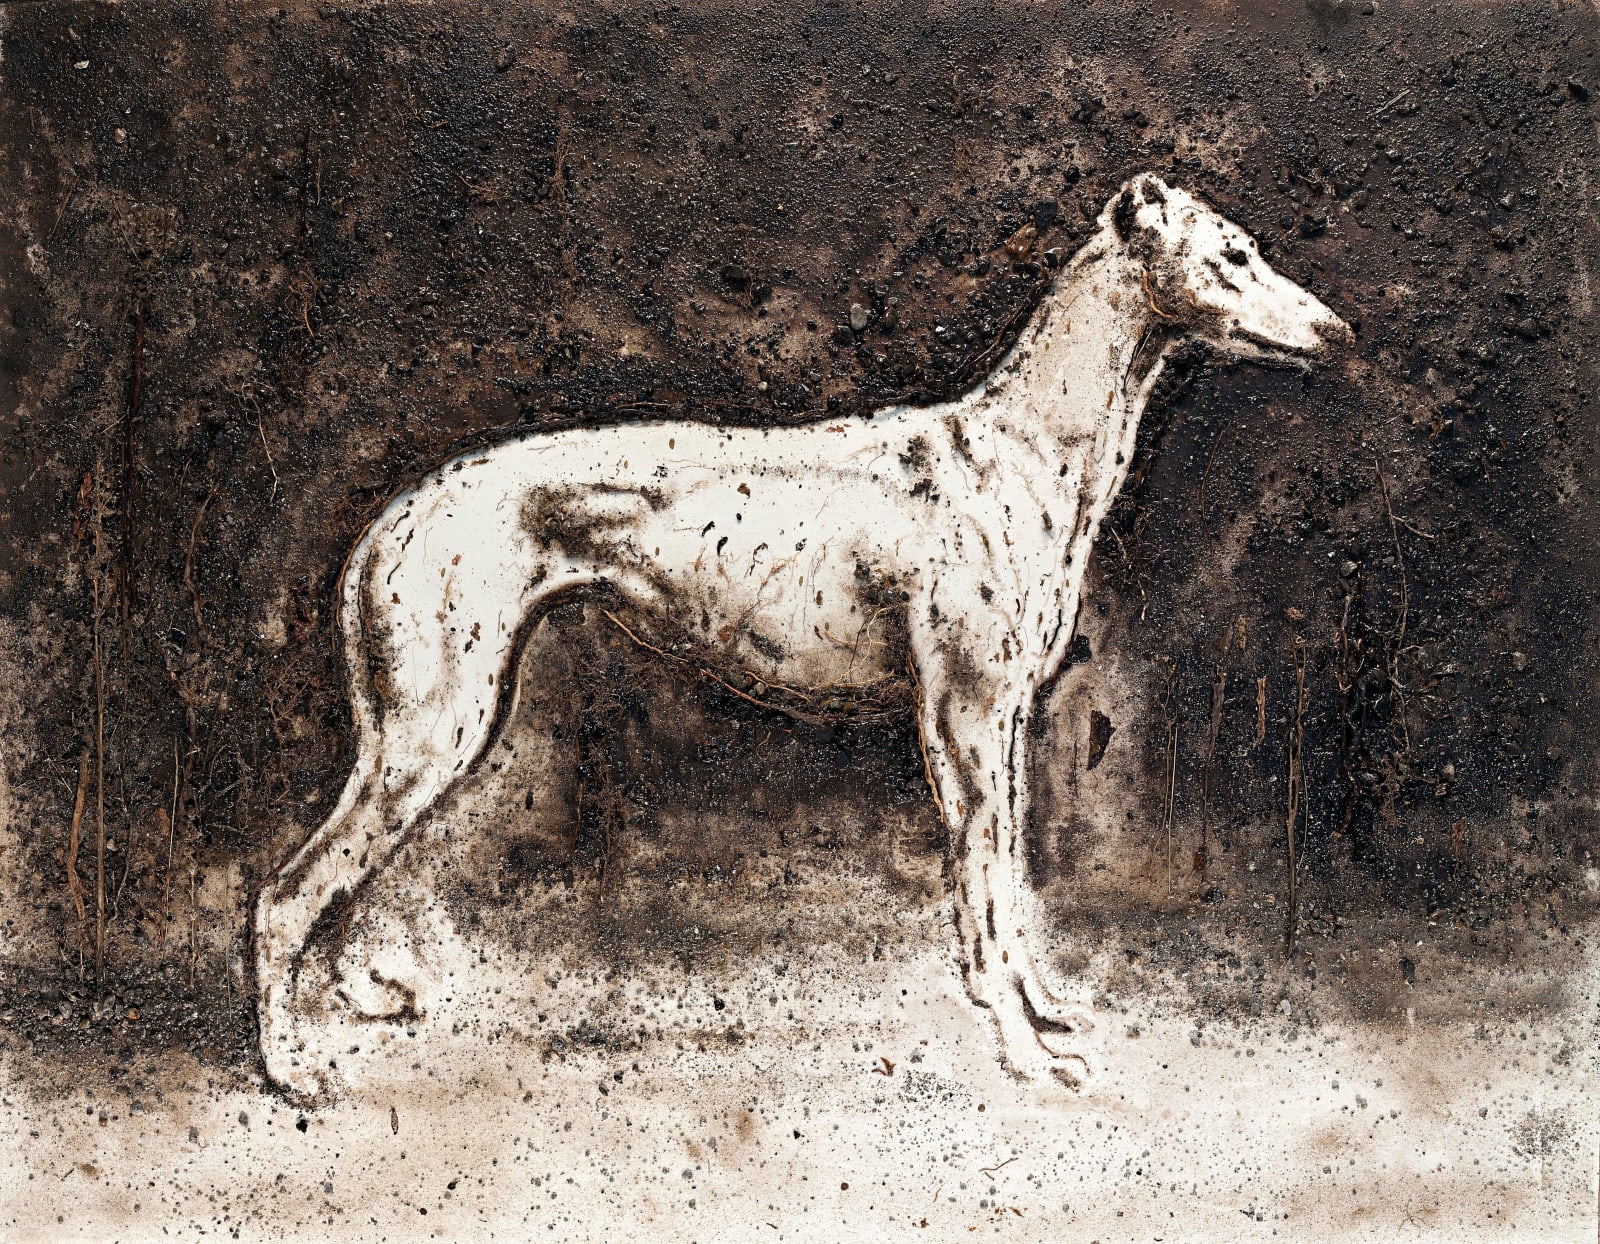 Enzo Fiore, Zoology Greyhound, 2010